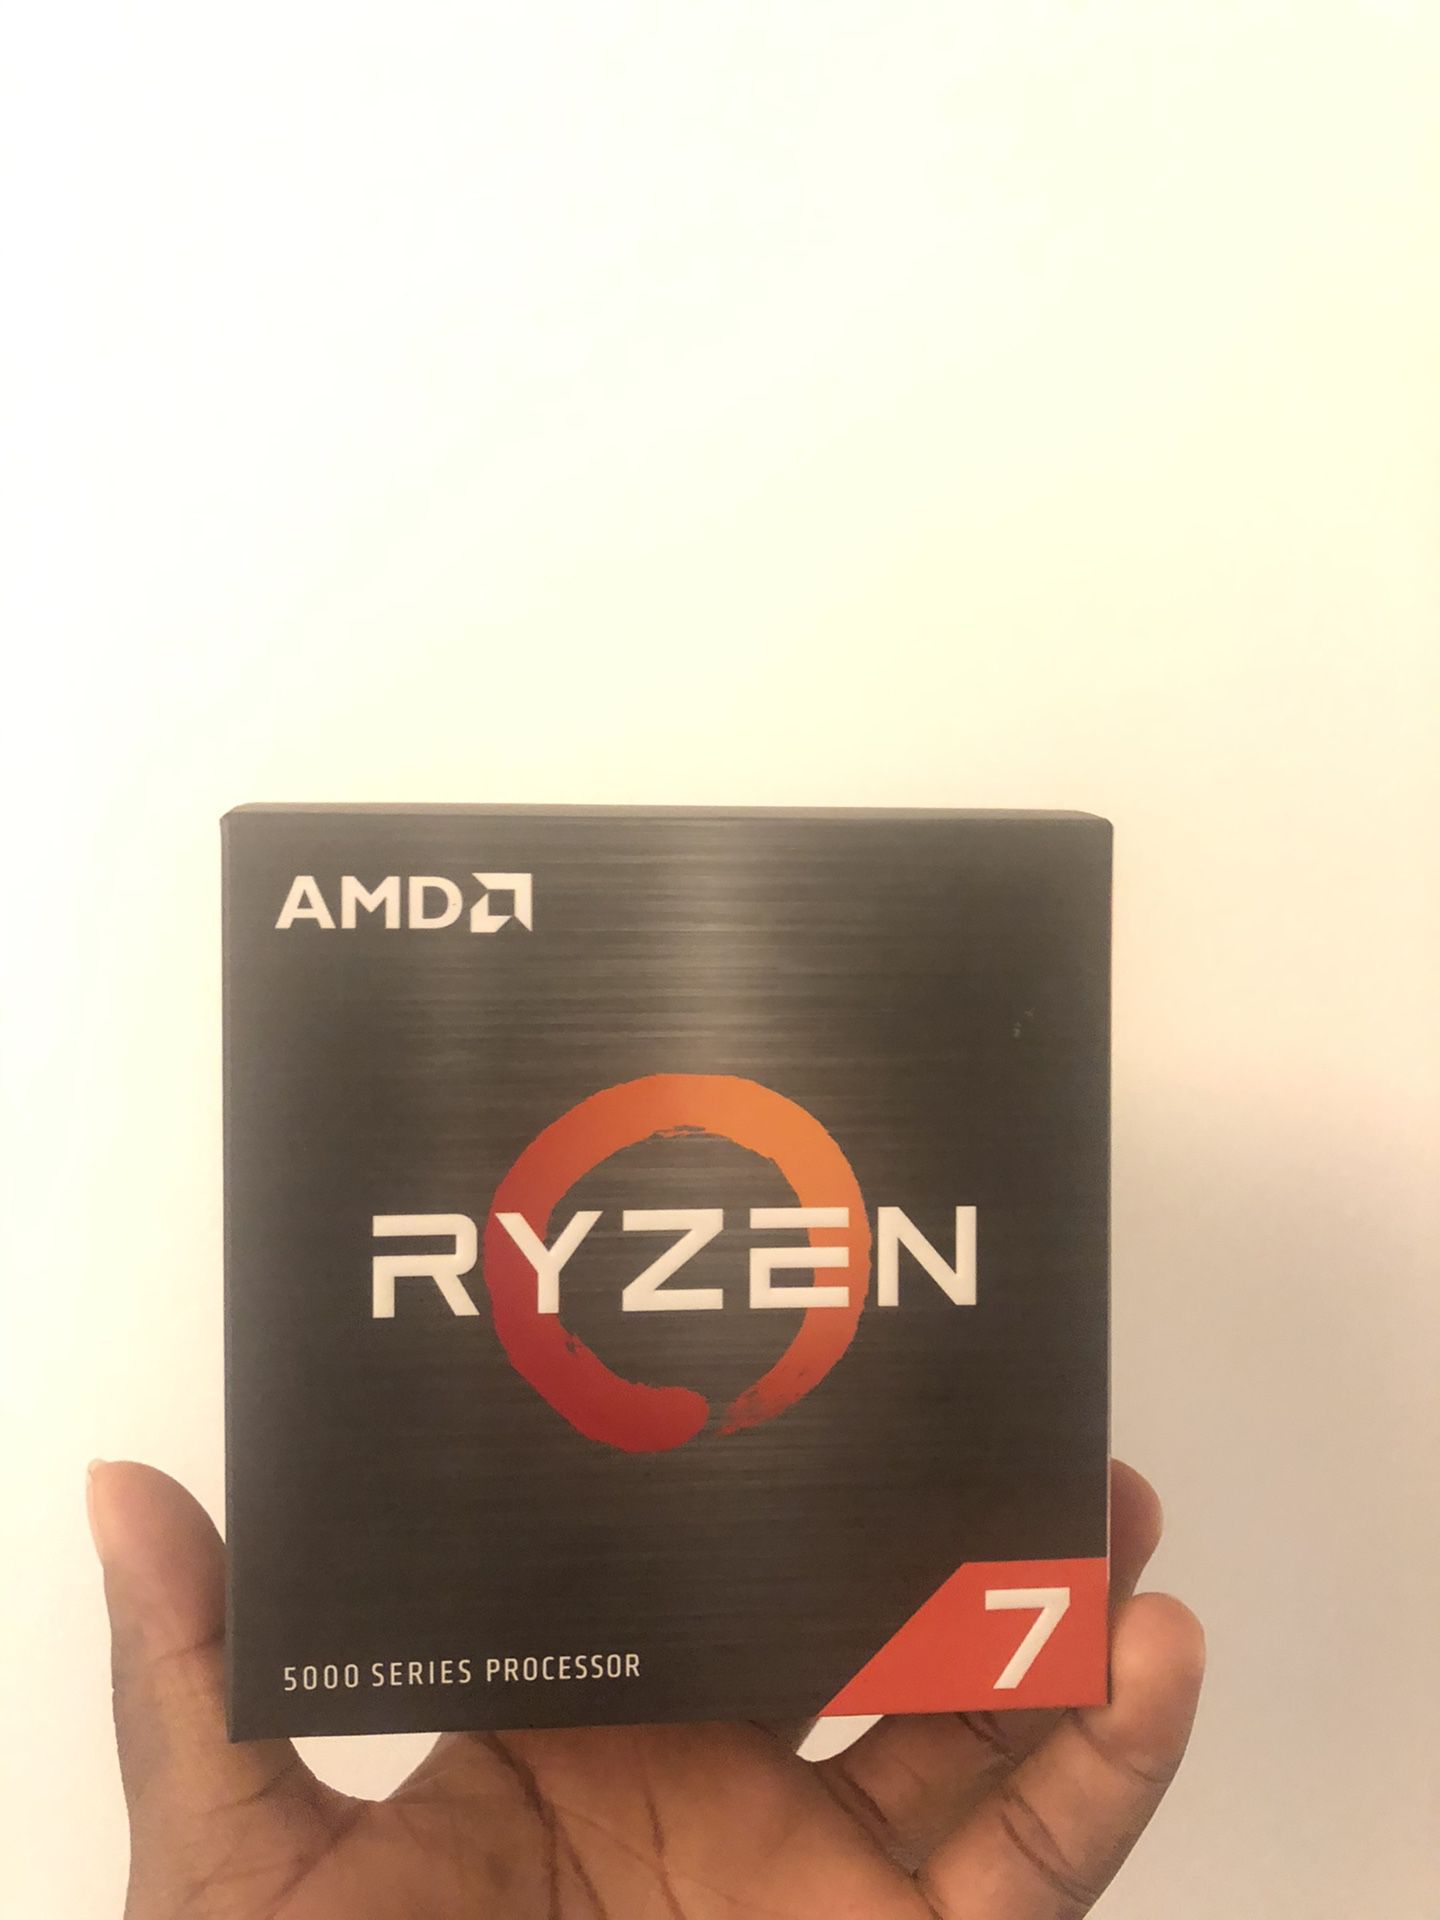 AMD Ryzen 7 5800X Desktop Processor (4.7GHz, 8 Cores, Socket AM4)